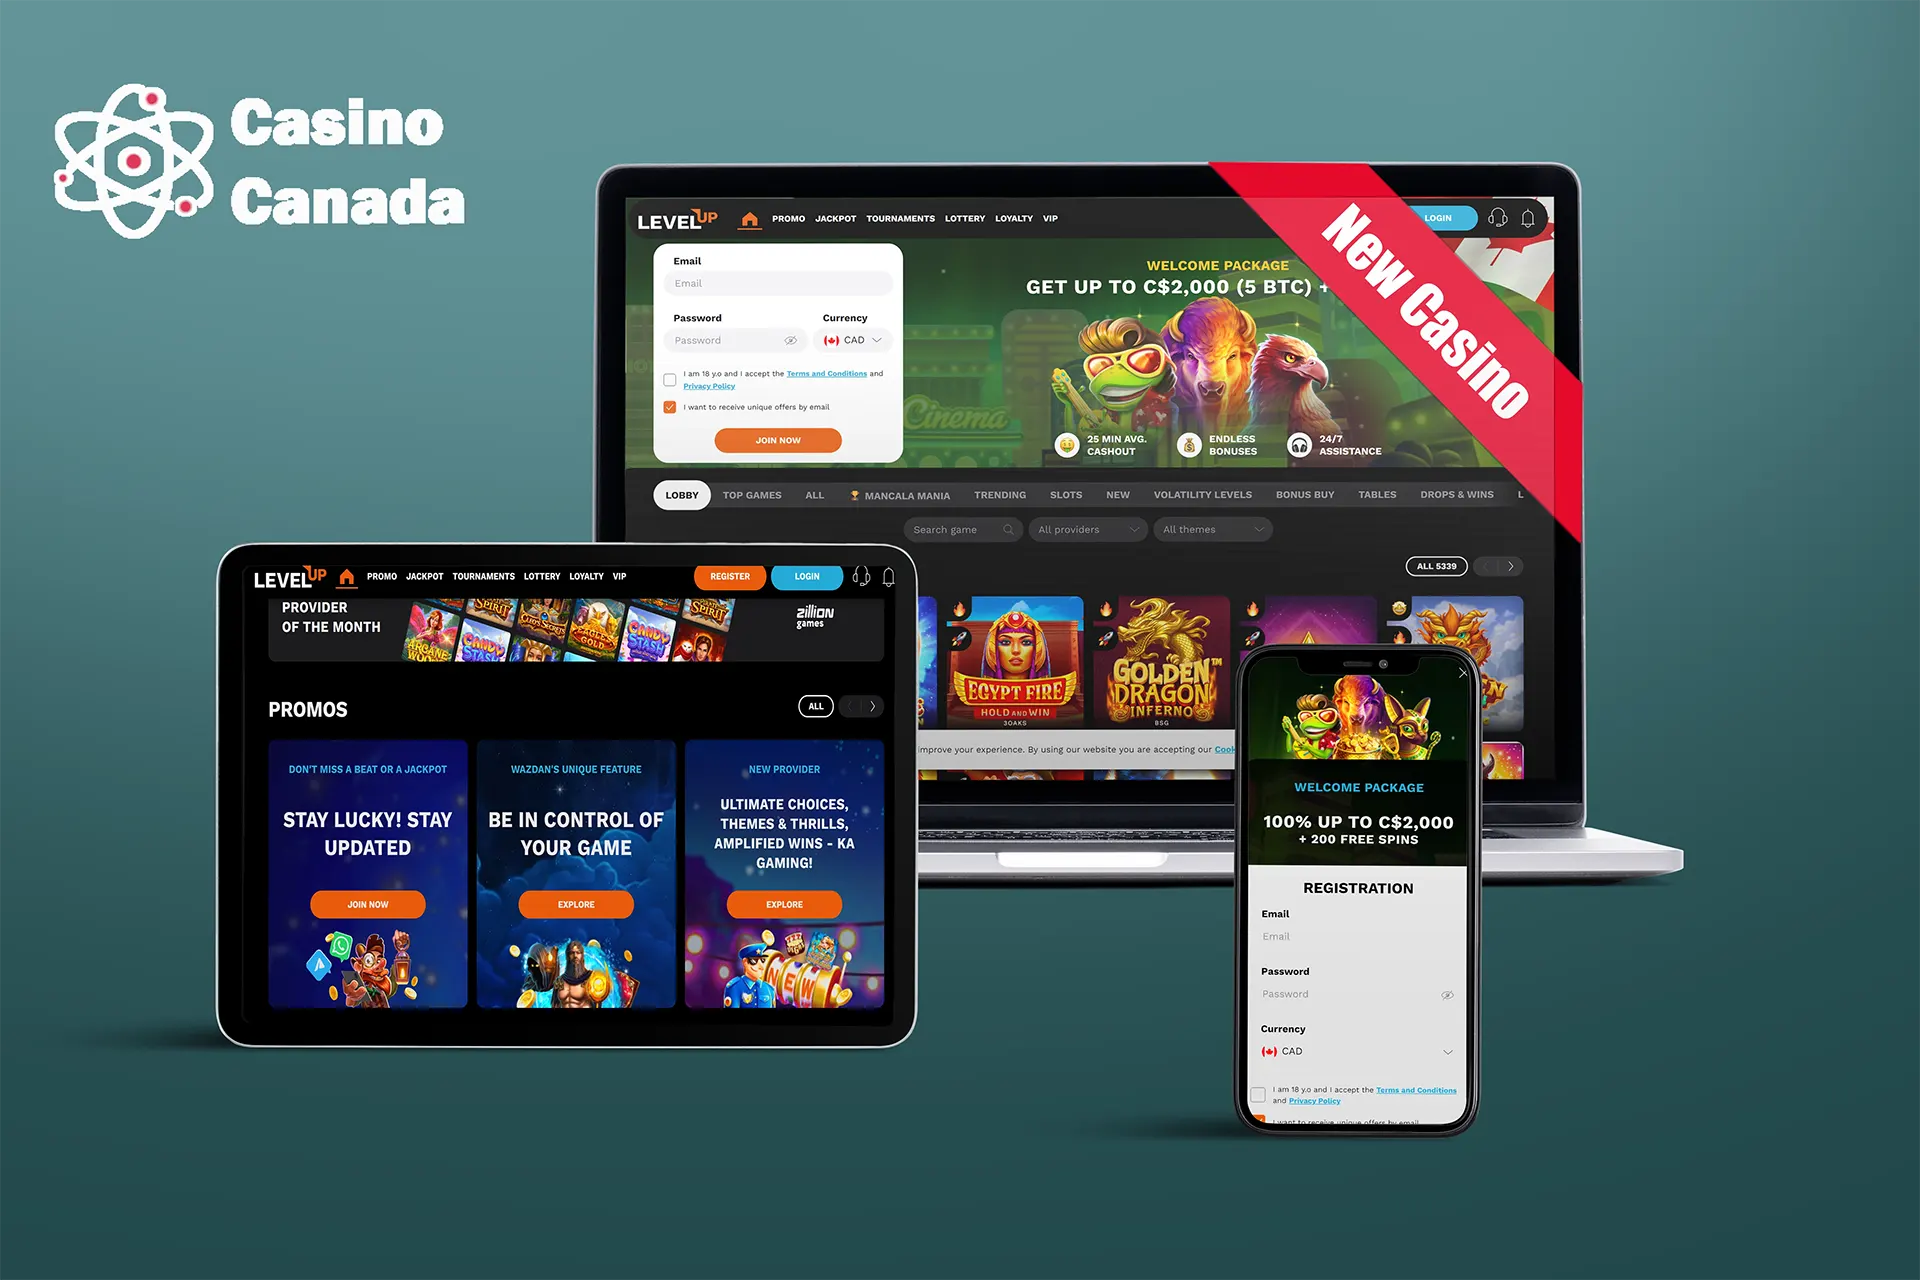 Screenshots of the LevelUp New Casino